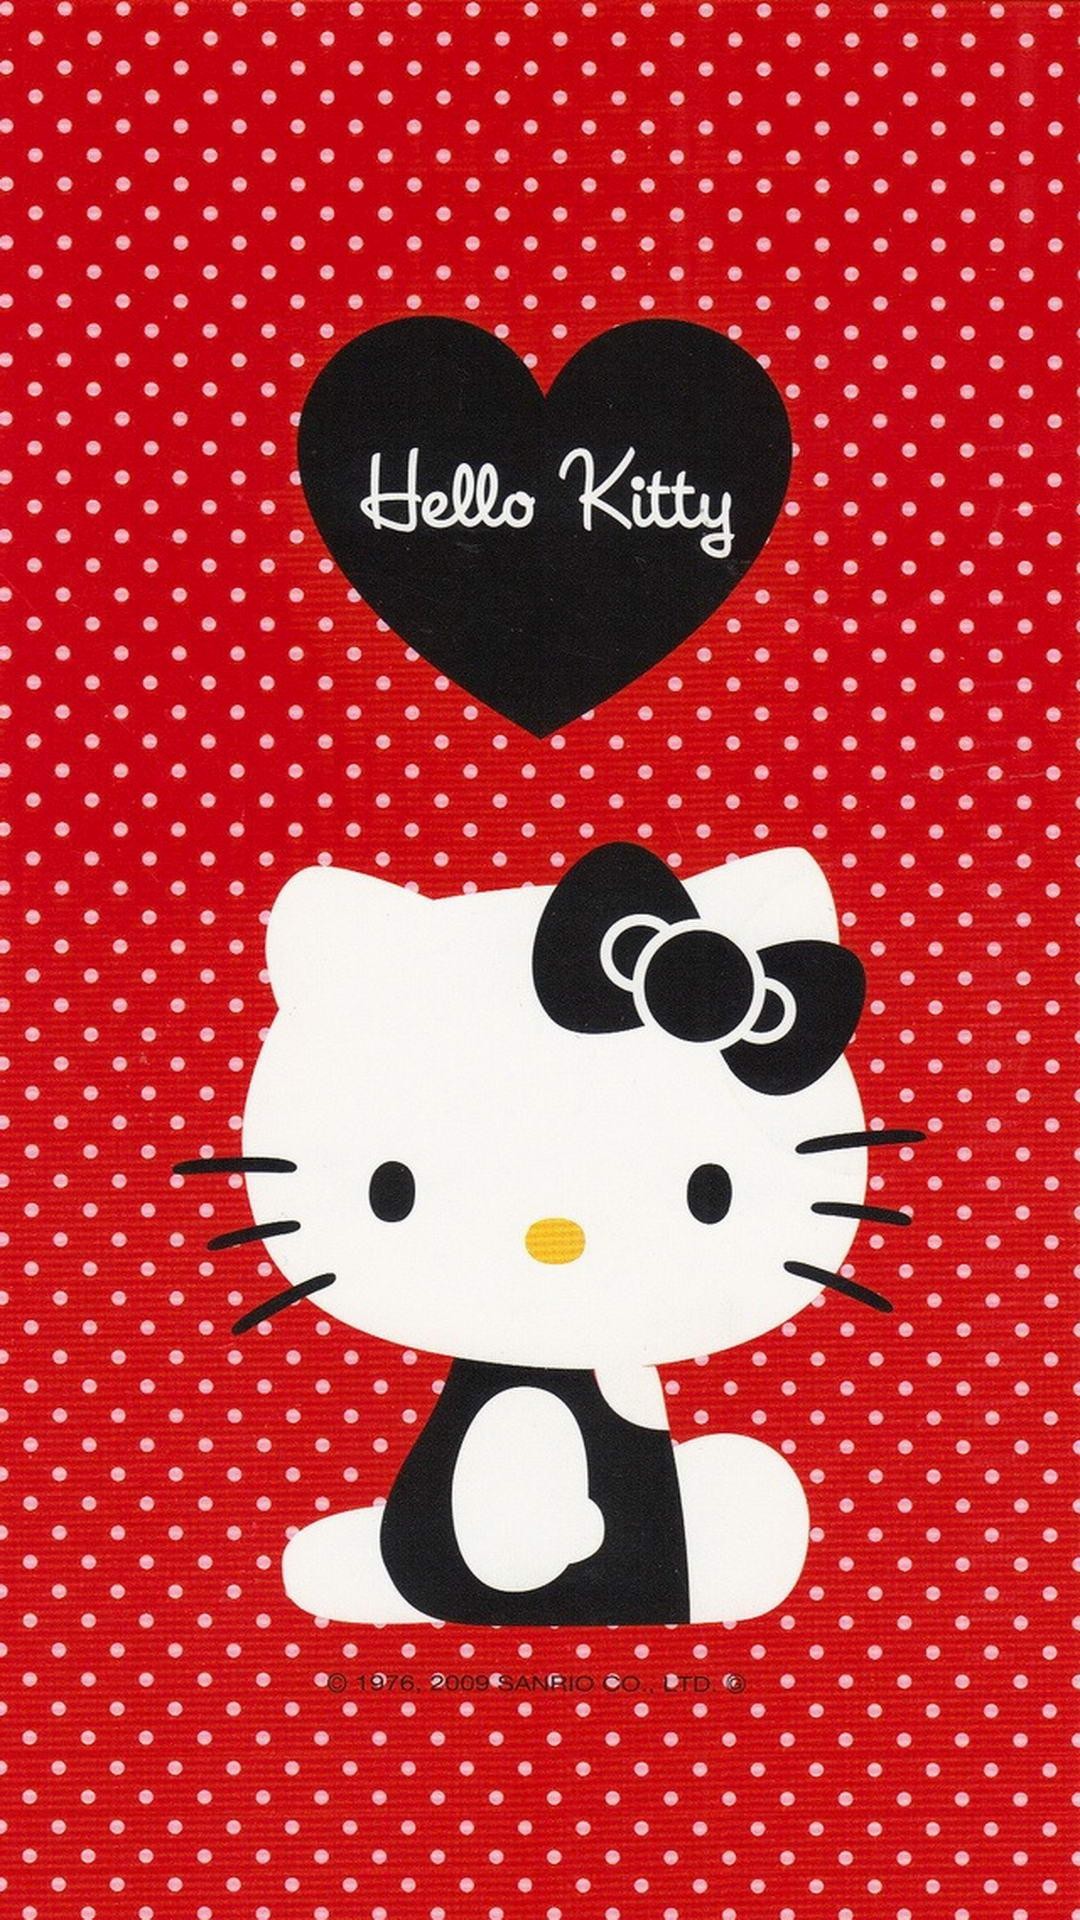 1080x1920 Hello Kitty Nerd - wallpaper.